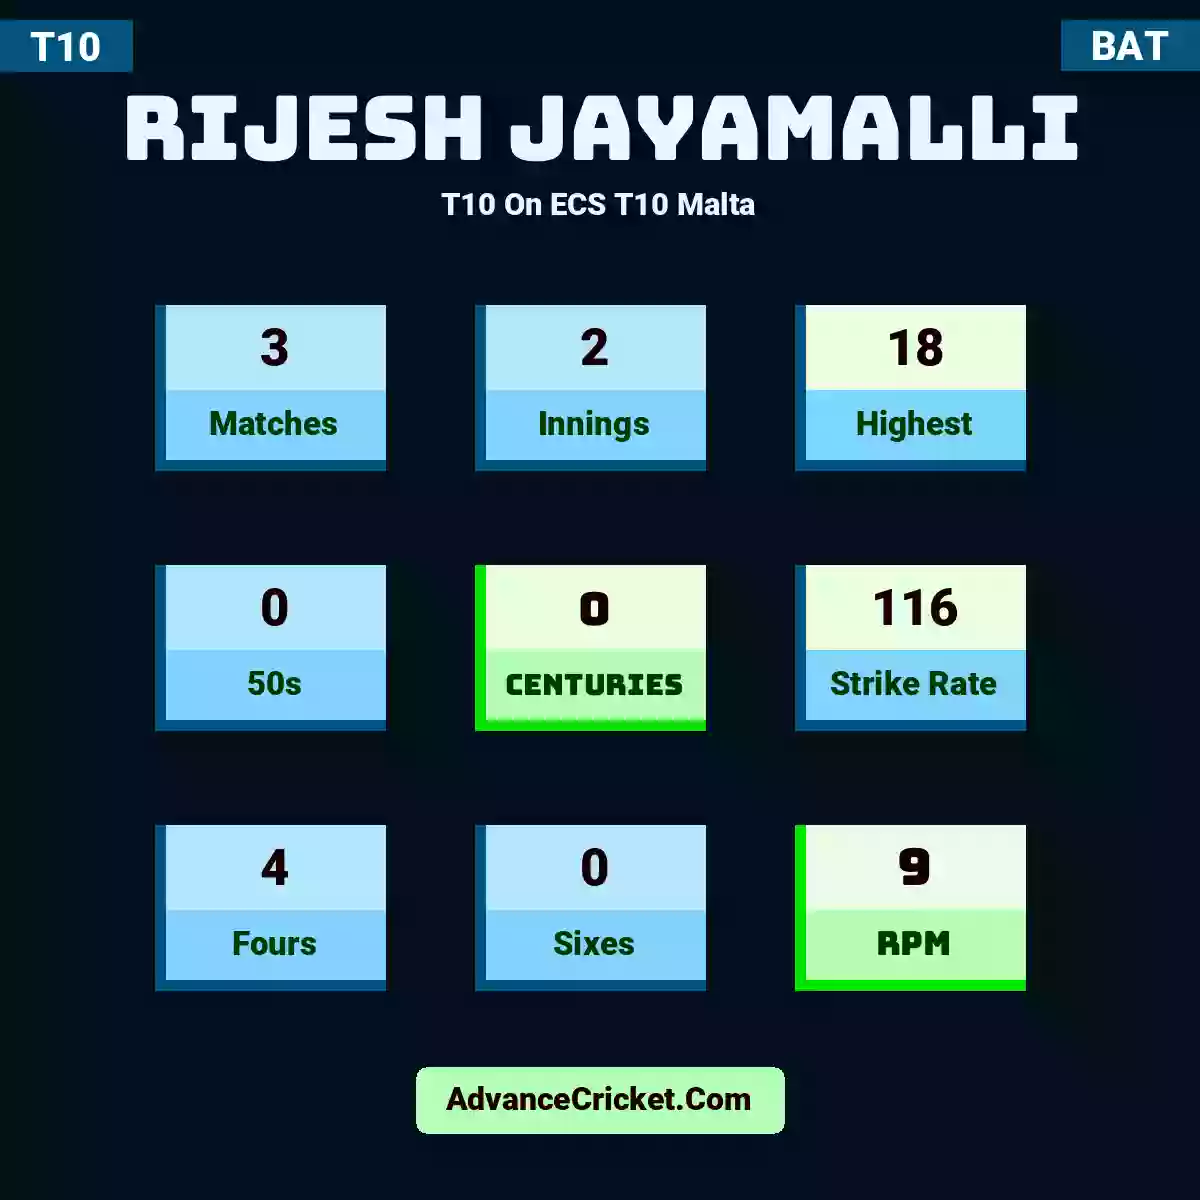 Rijesh Jayamalli T10  On ECS T10 Malta, Rijesh Jayamalli played 3 matches, scored 18 runs as highest, 0 half-centuries, and 0 centuries, with a strike rate of 116. R.Jayamalli hit 4 fours and 0 sixes, with an RPM of 9.